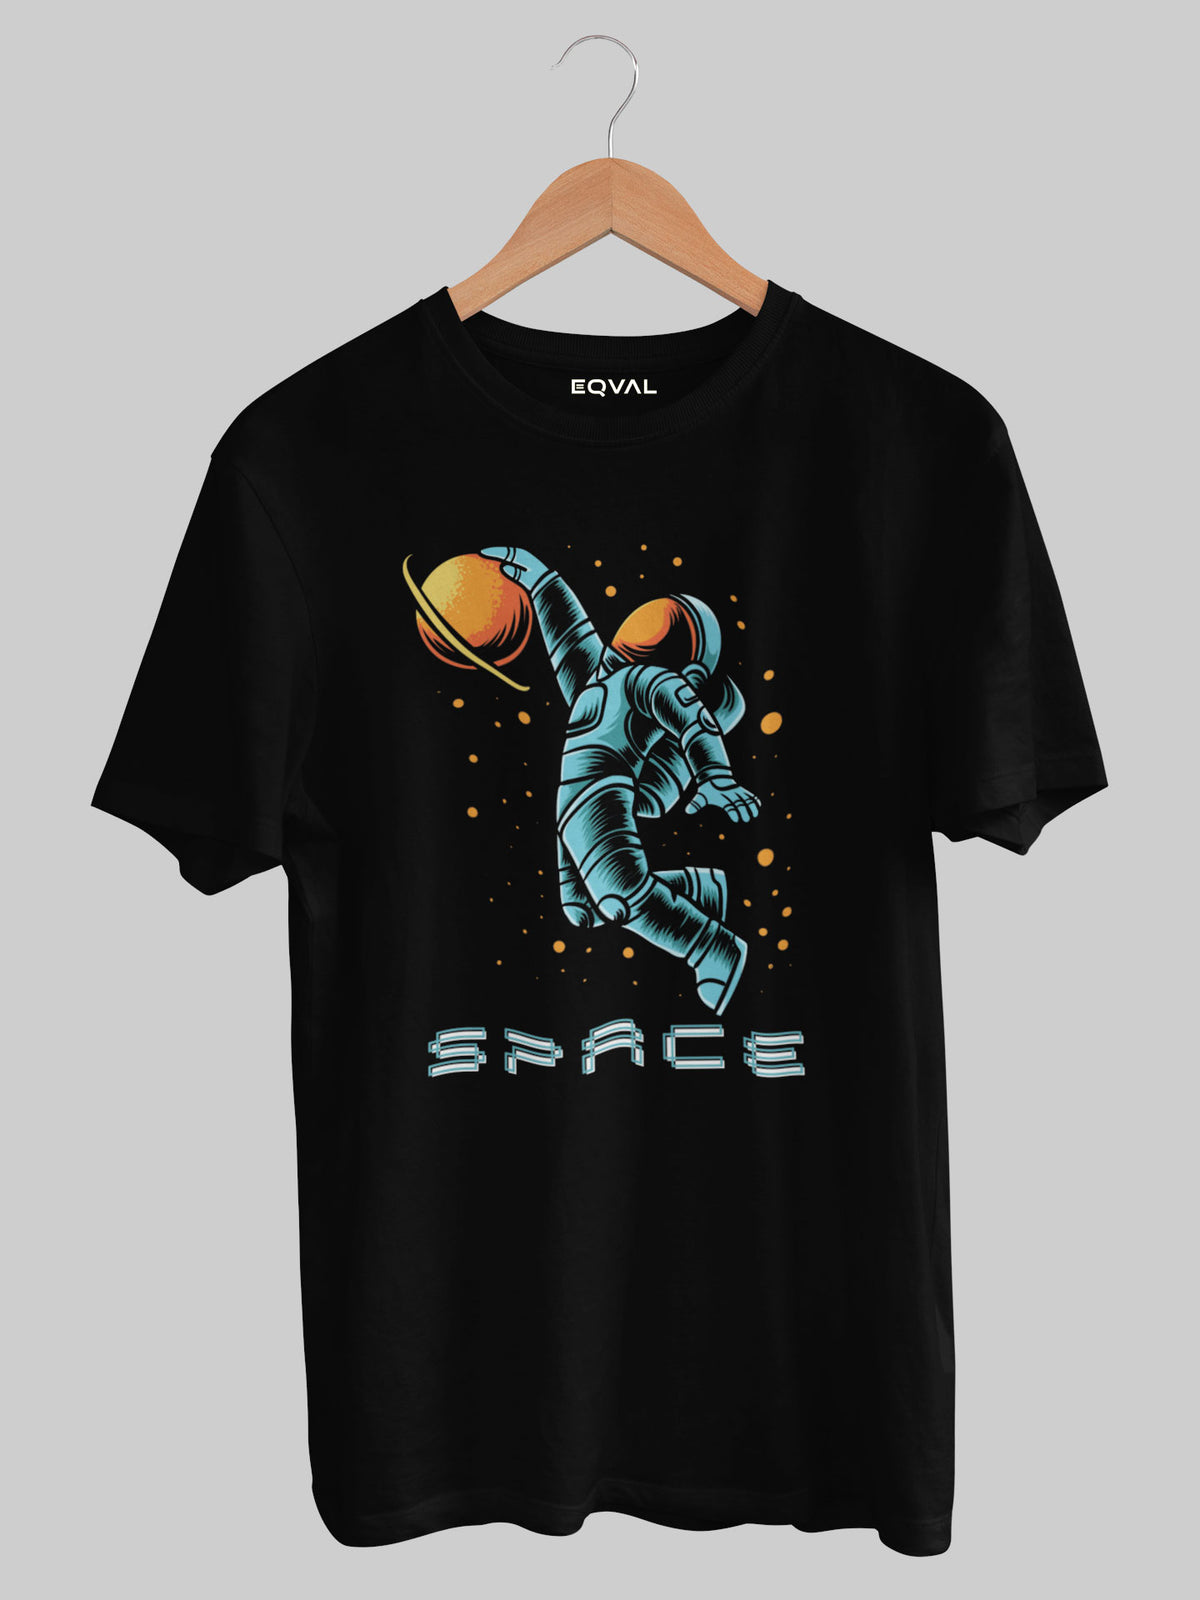 Space Printed Black T-shirt For Men